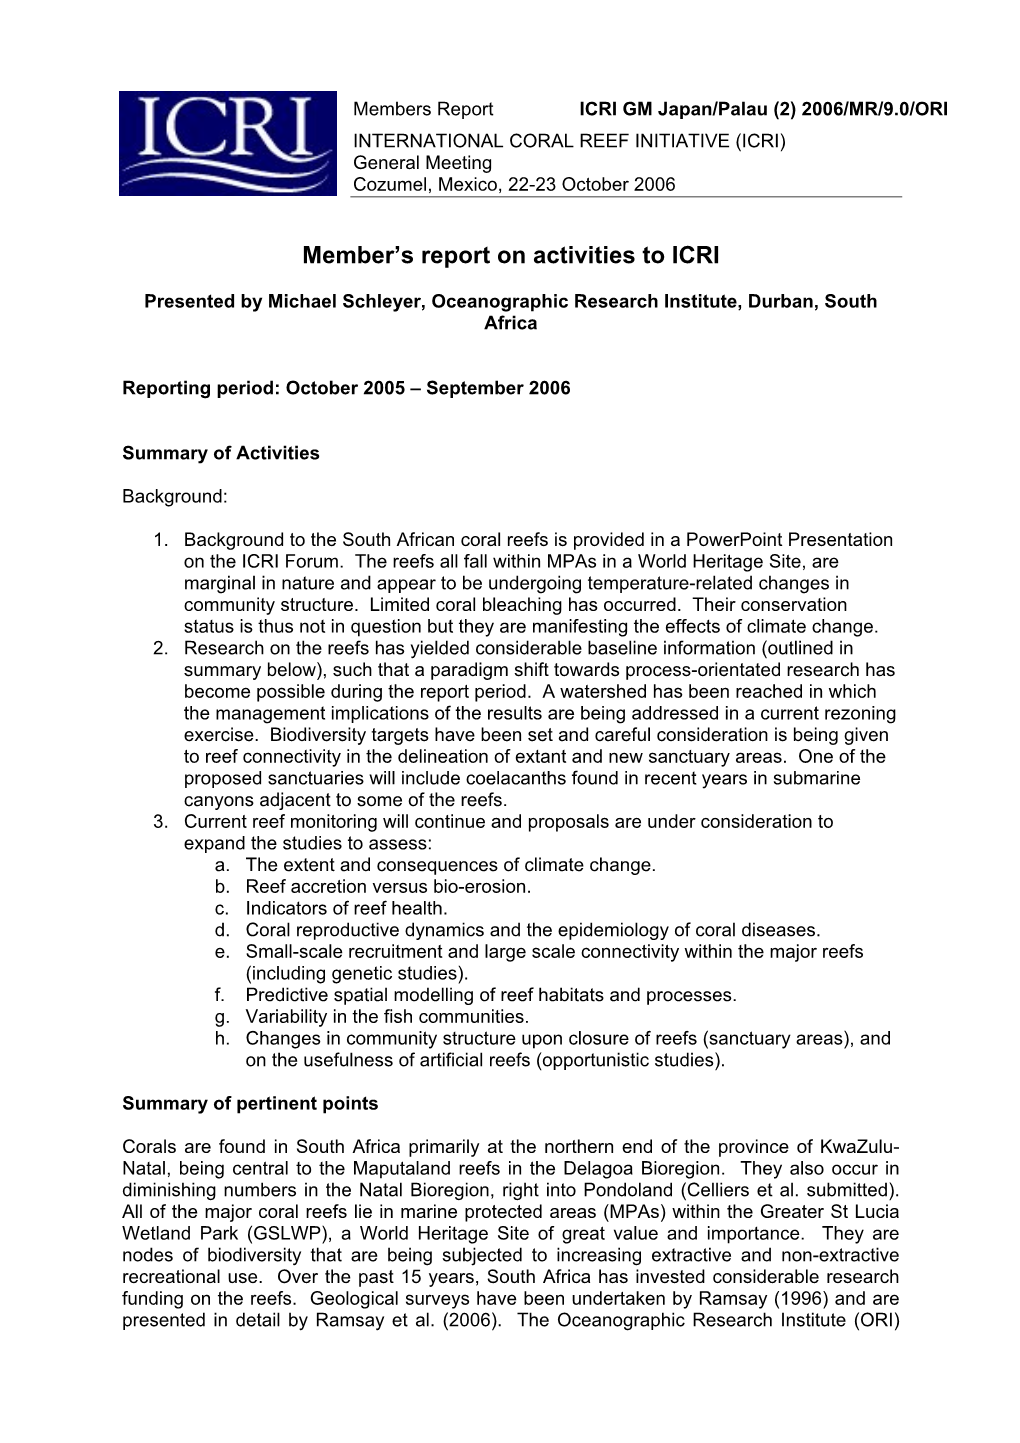 Member's Report on Activities to ICRI